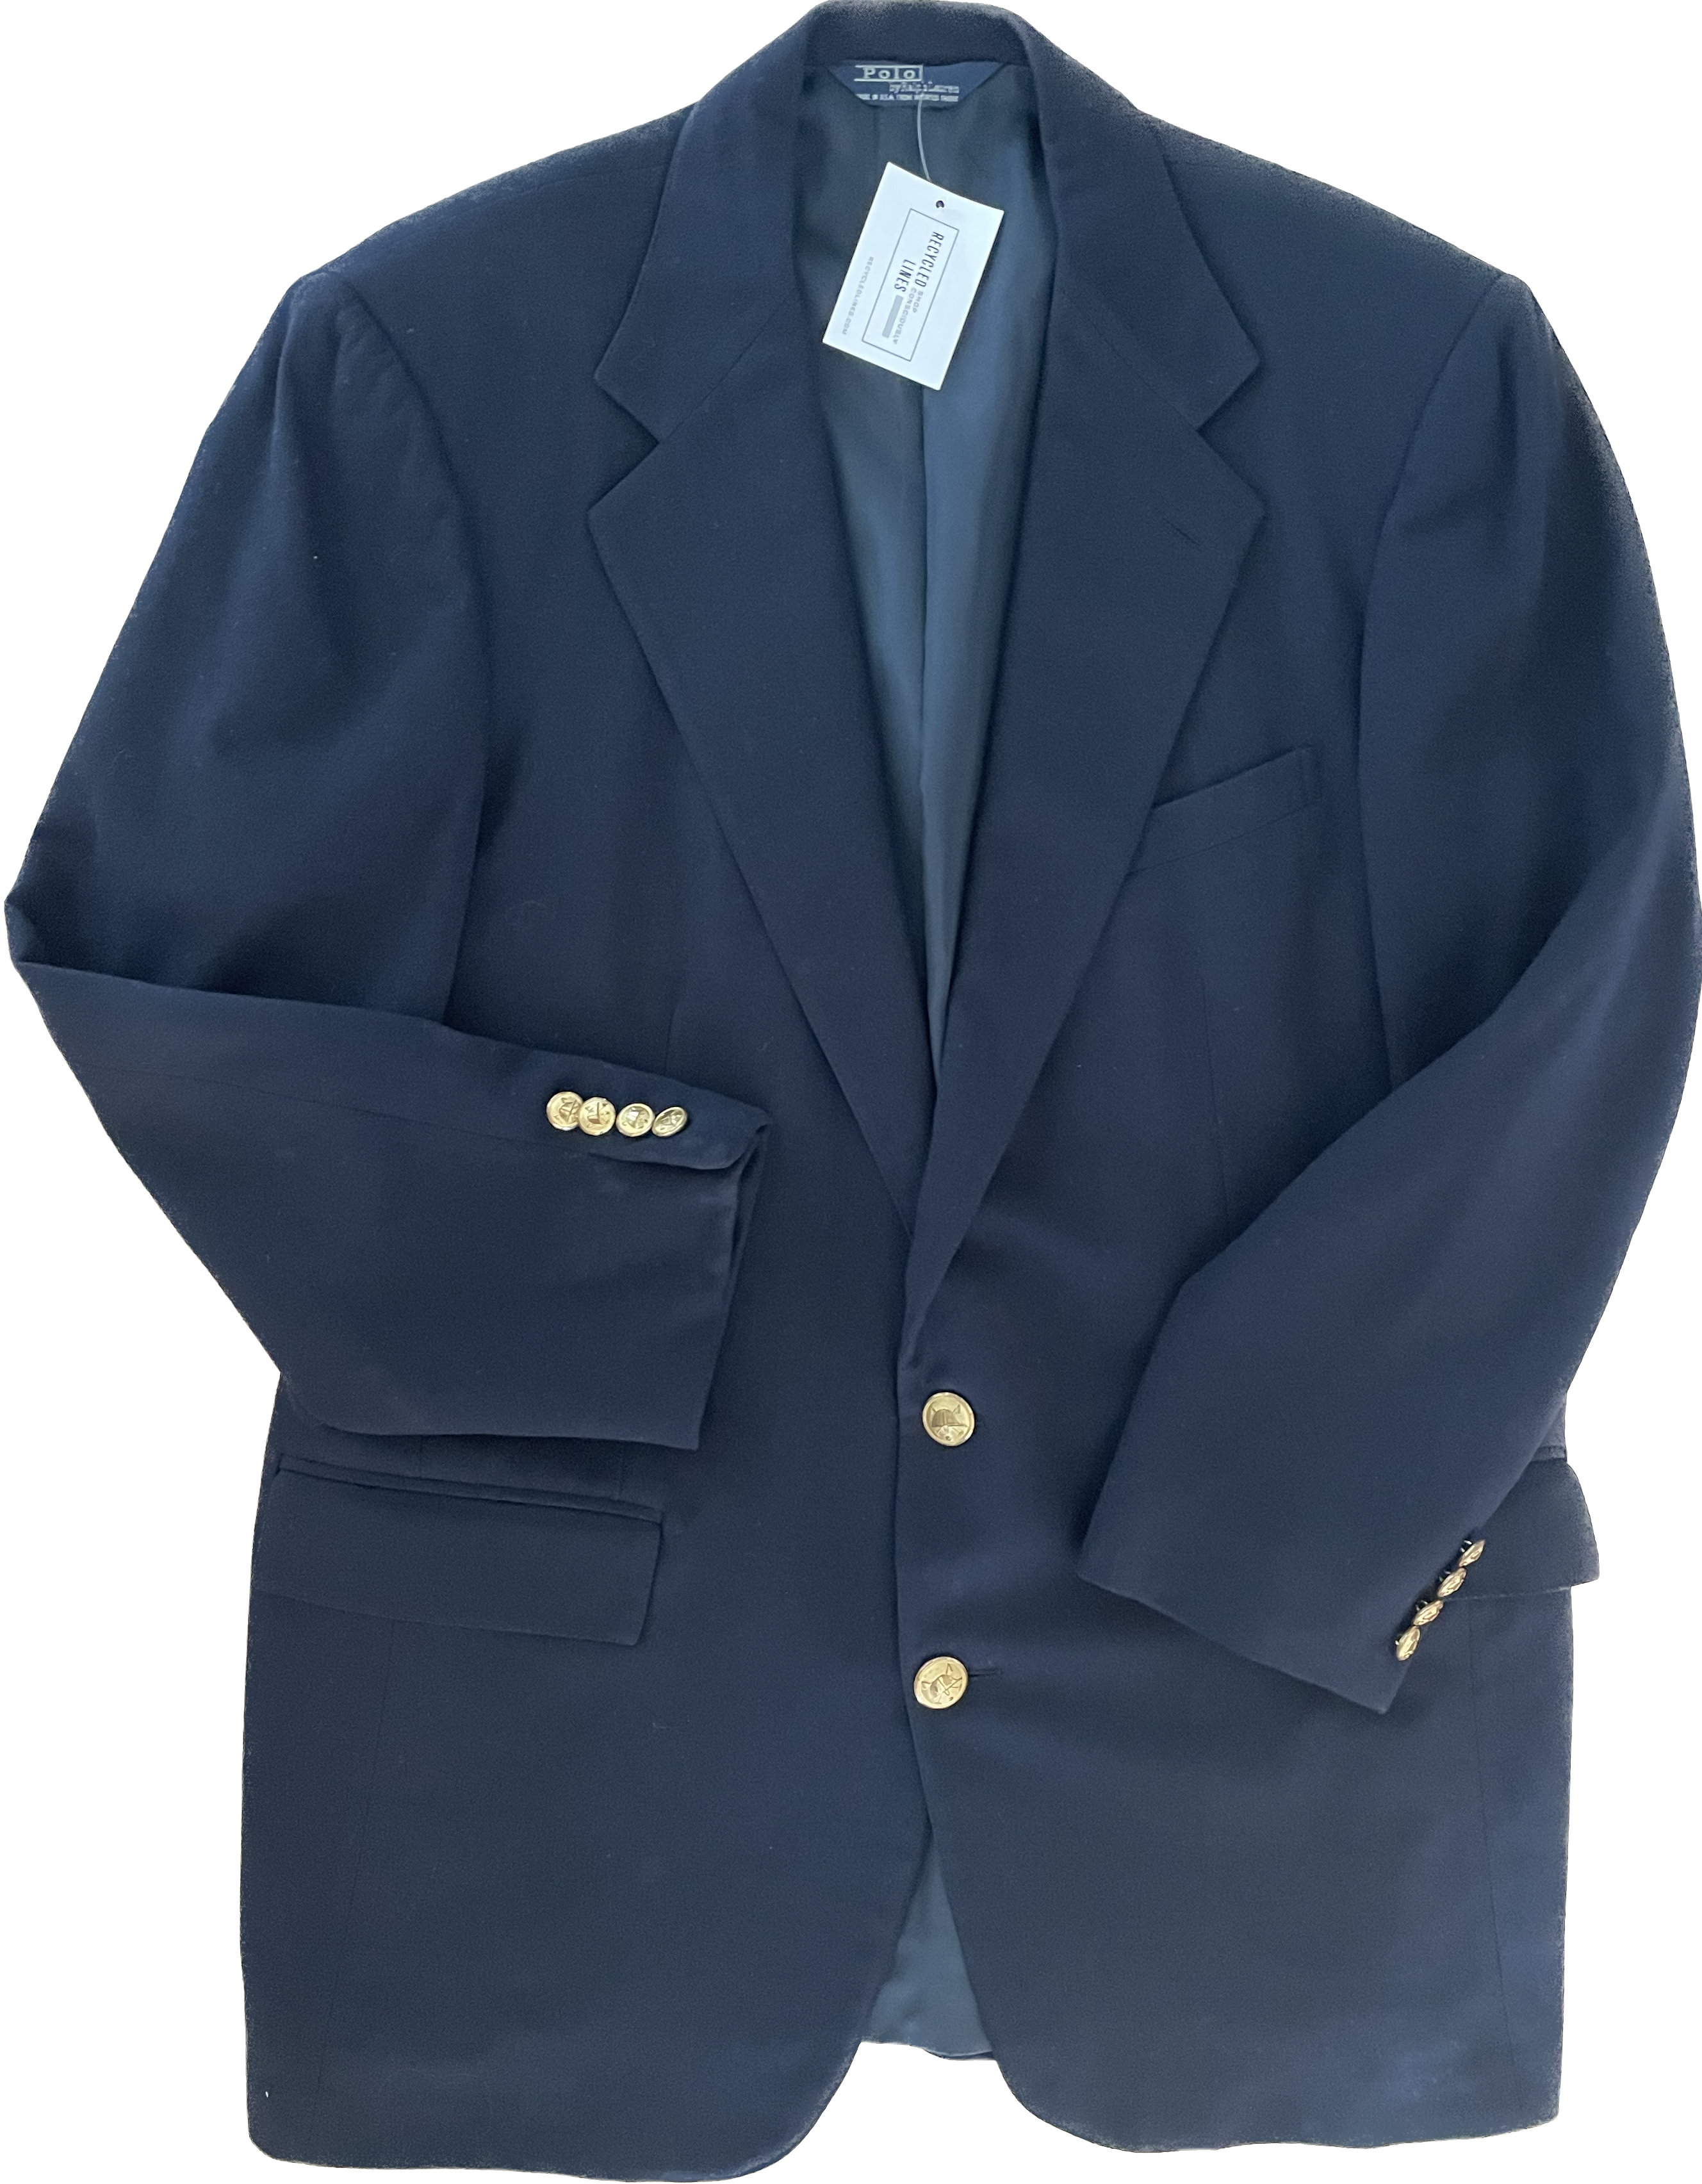 Polo by Ralph Lauren Blazer, Navy Mens Size 44L?